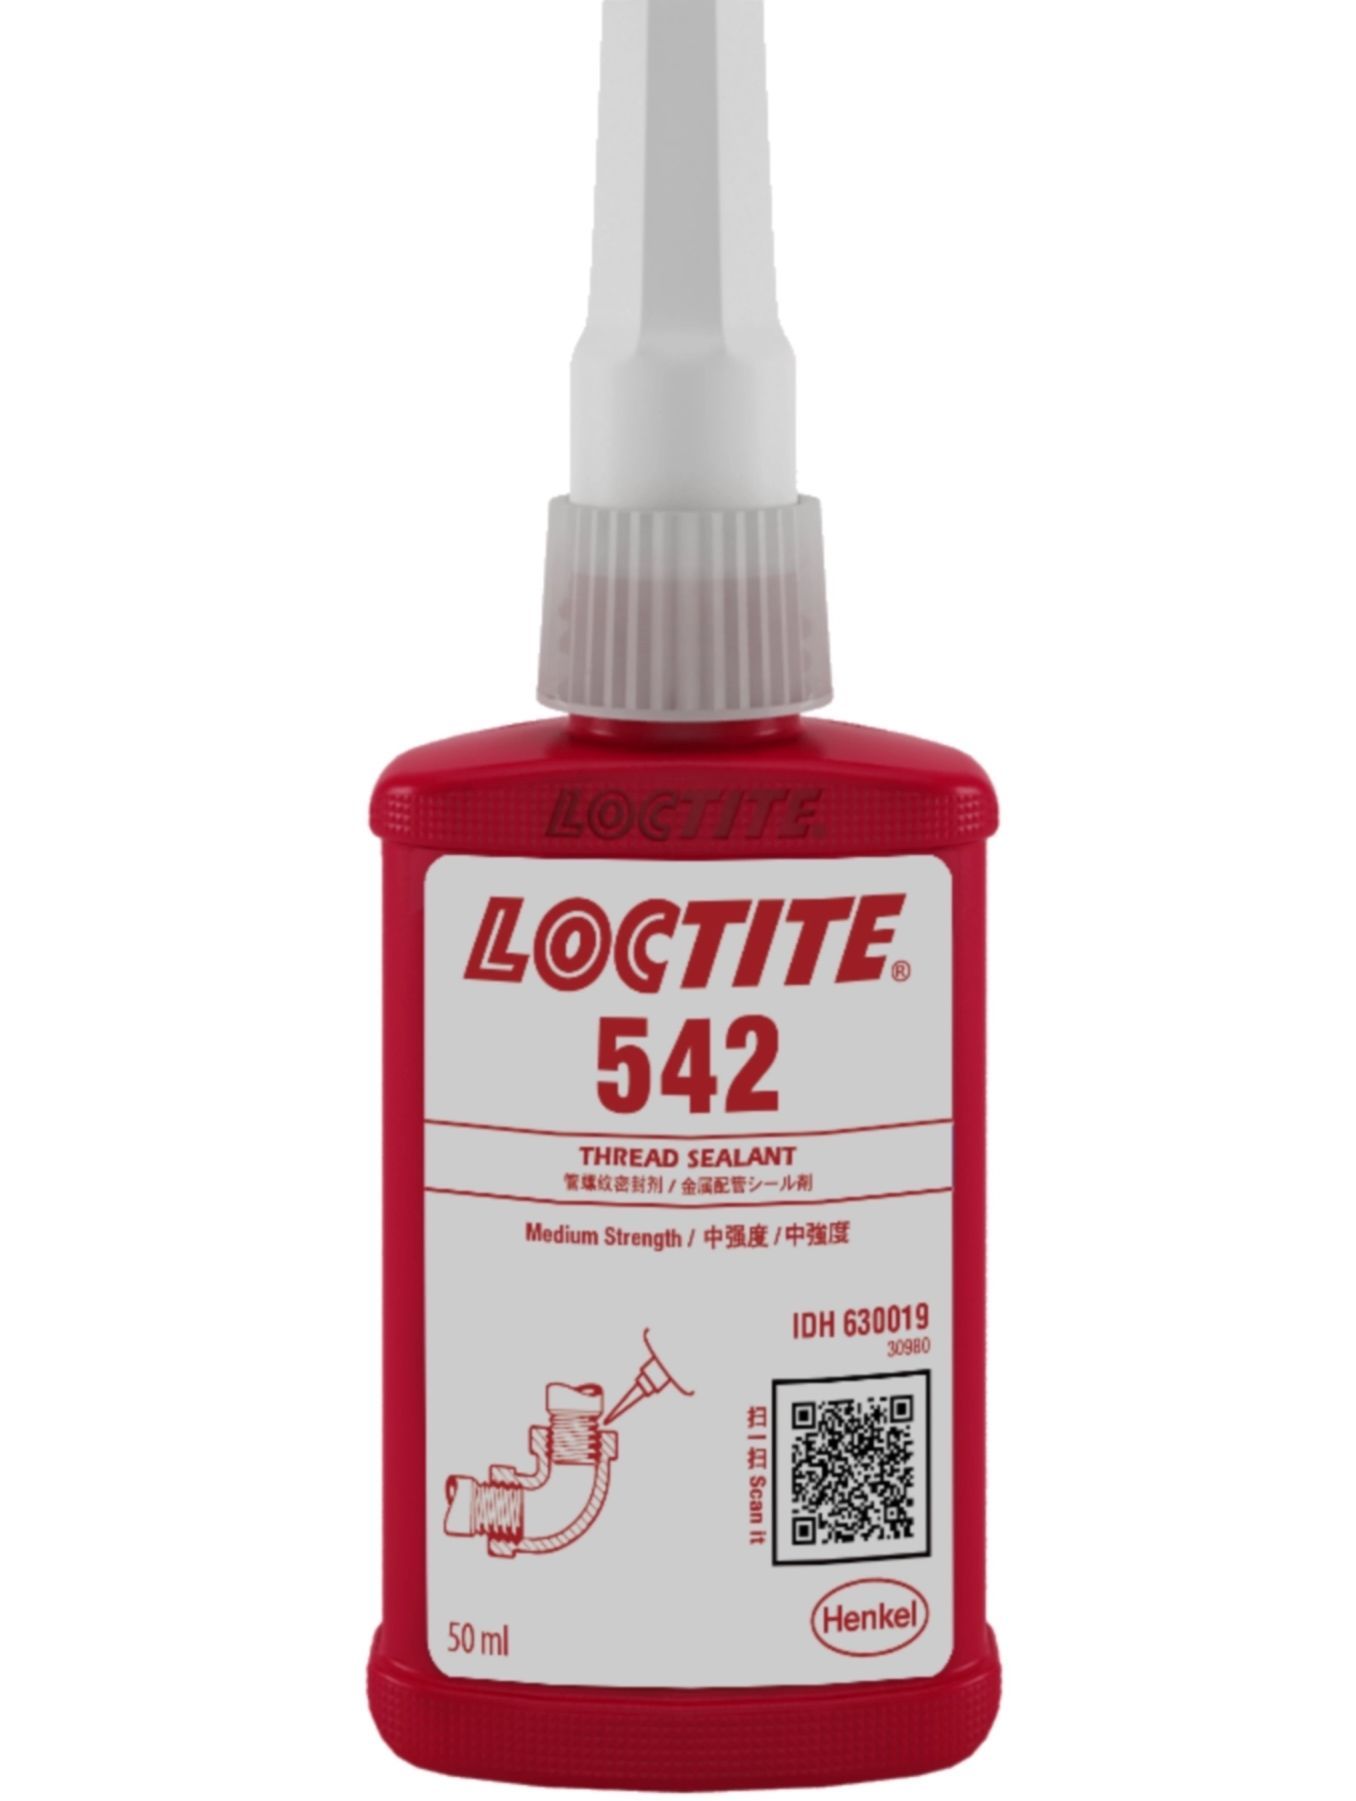 LOCTITE 542 Thread Sealant